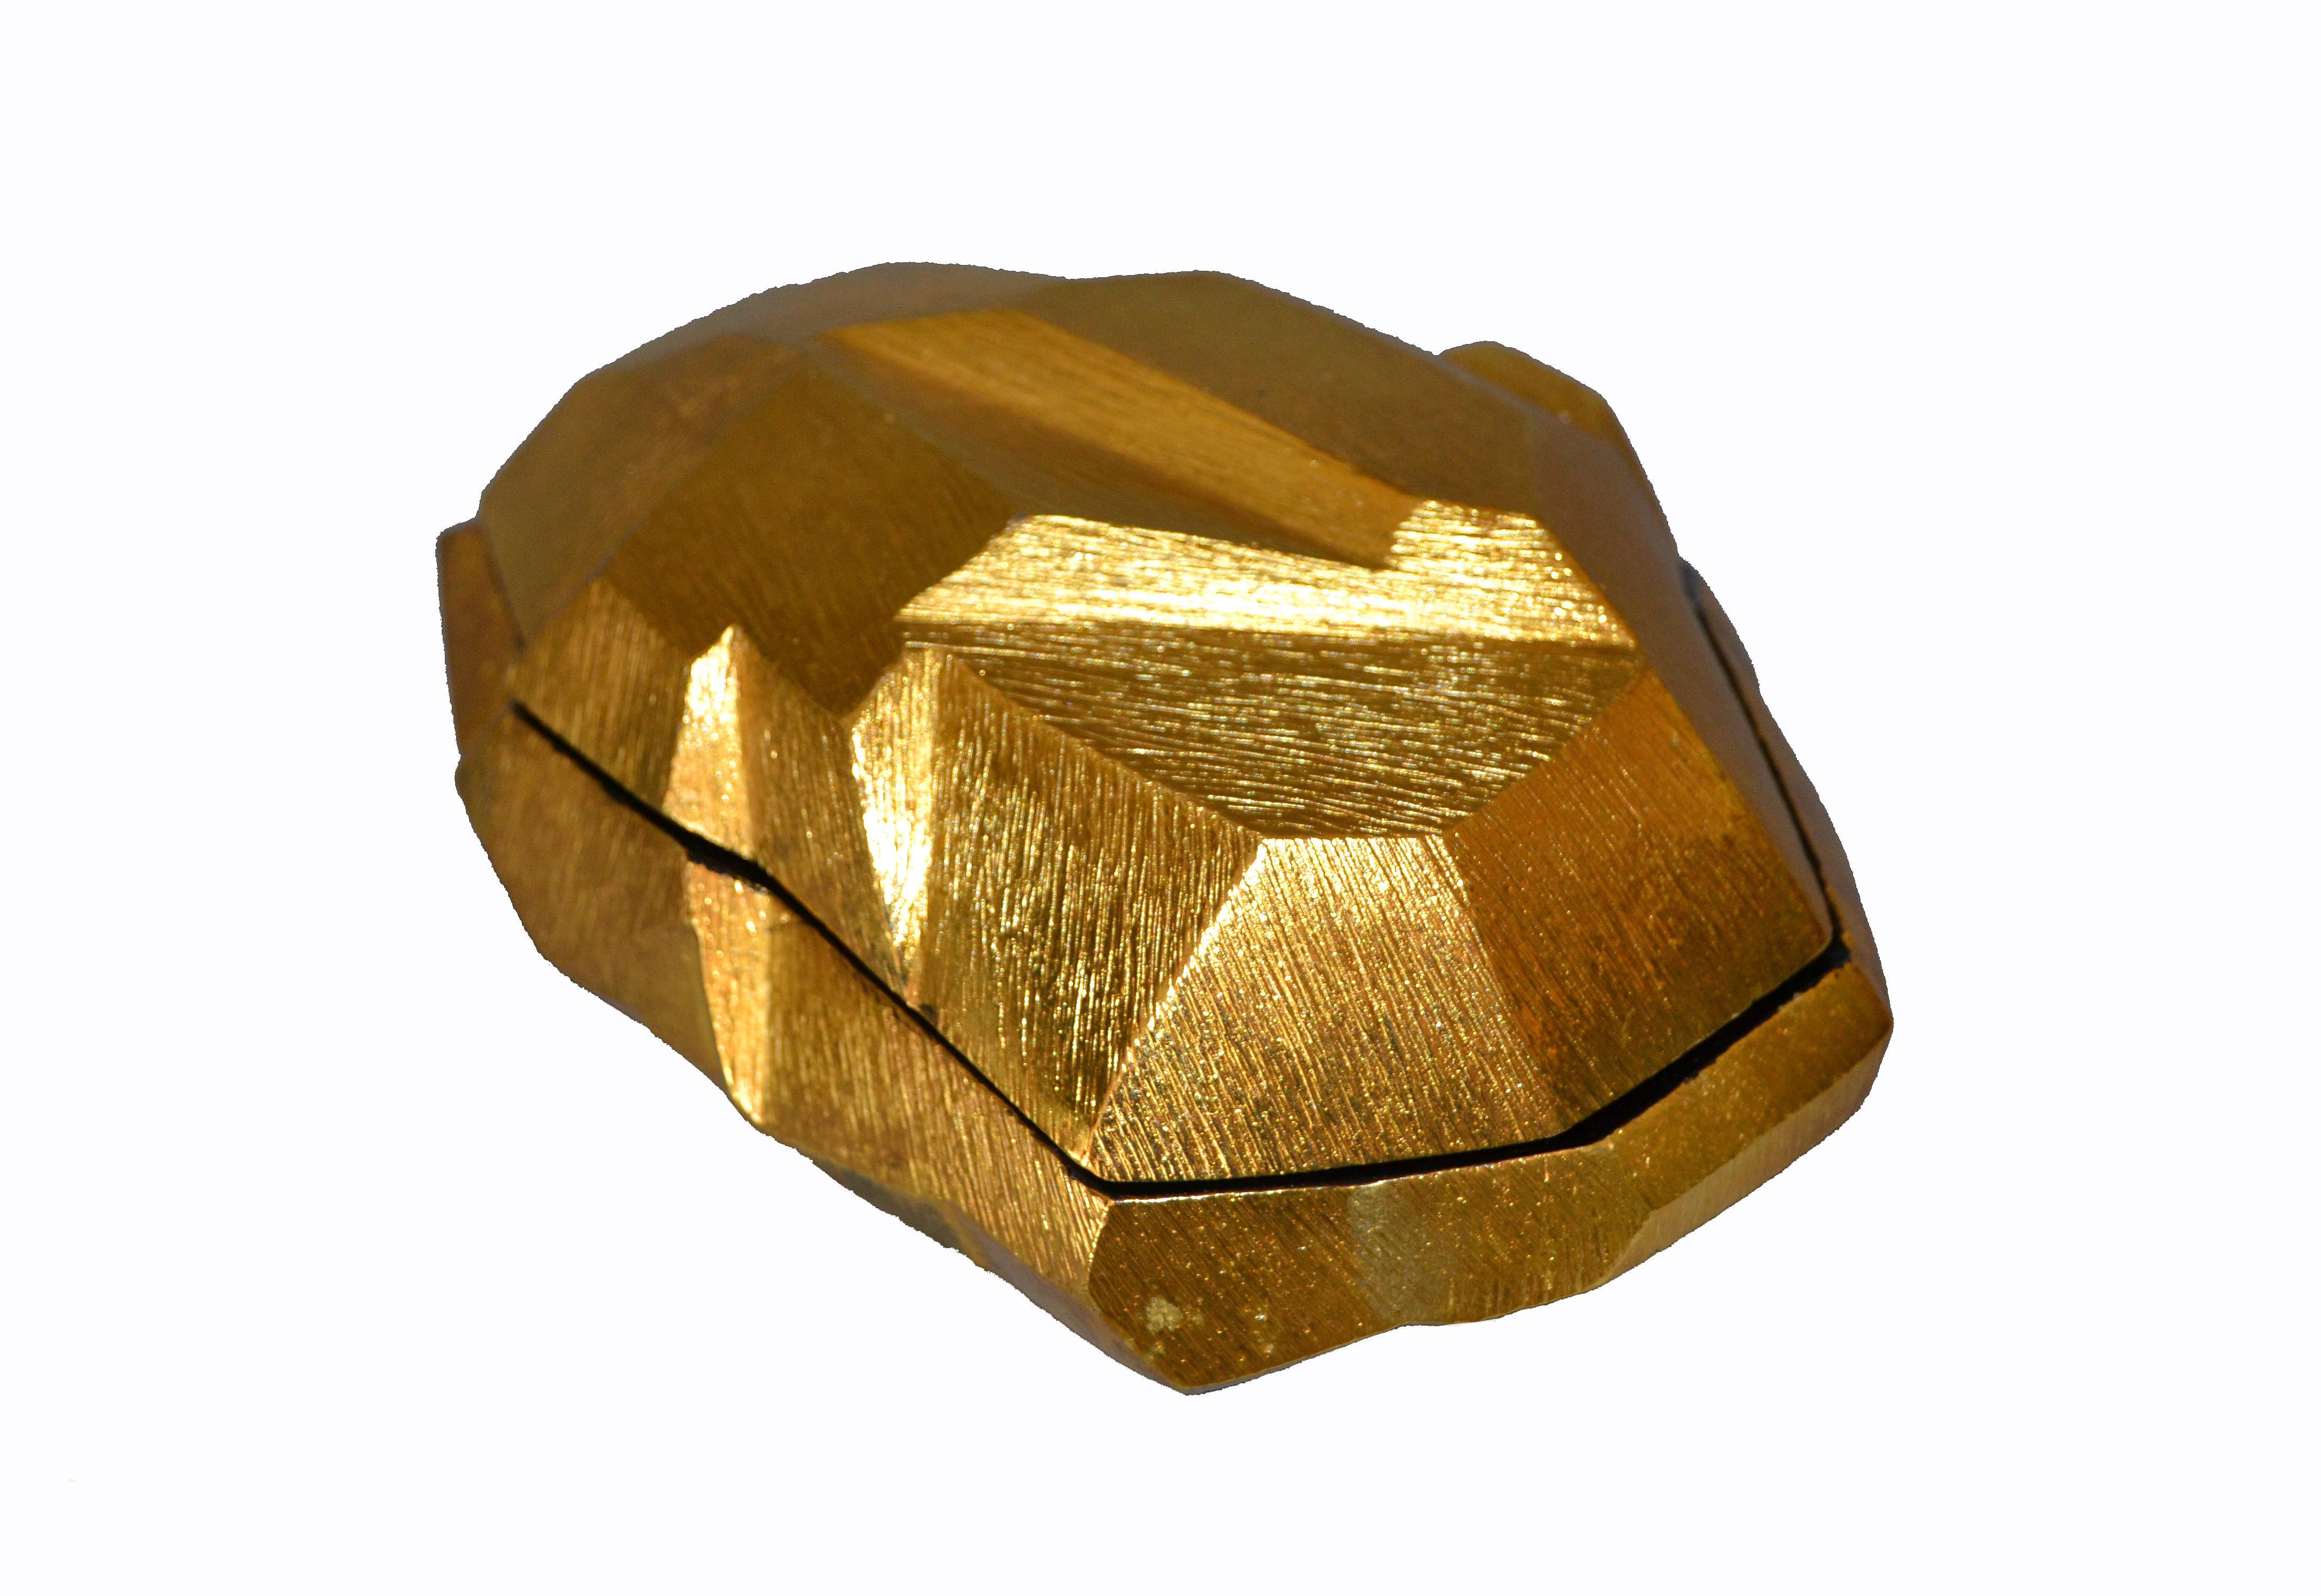 American Art Deco Golden Rock Box by Michael Aram